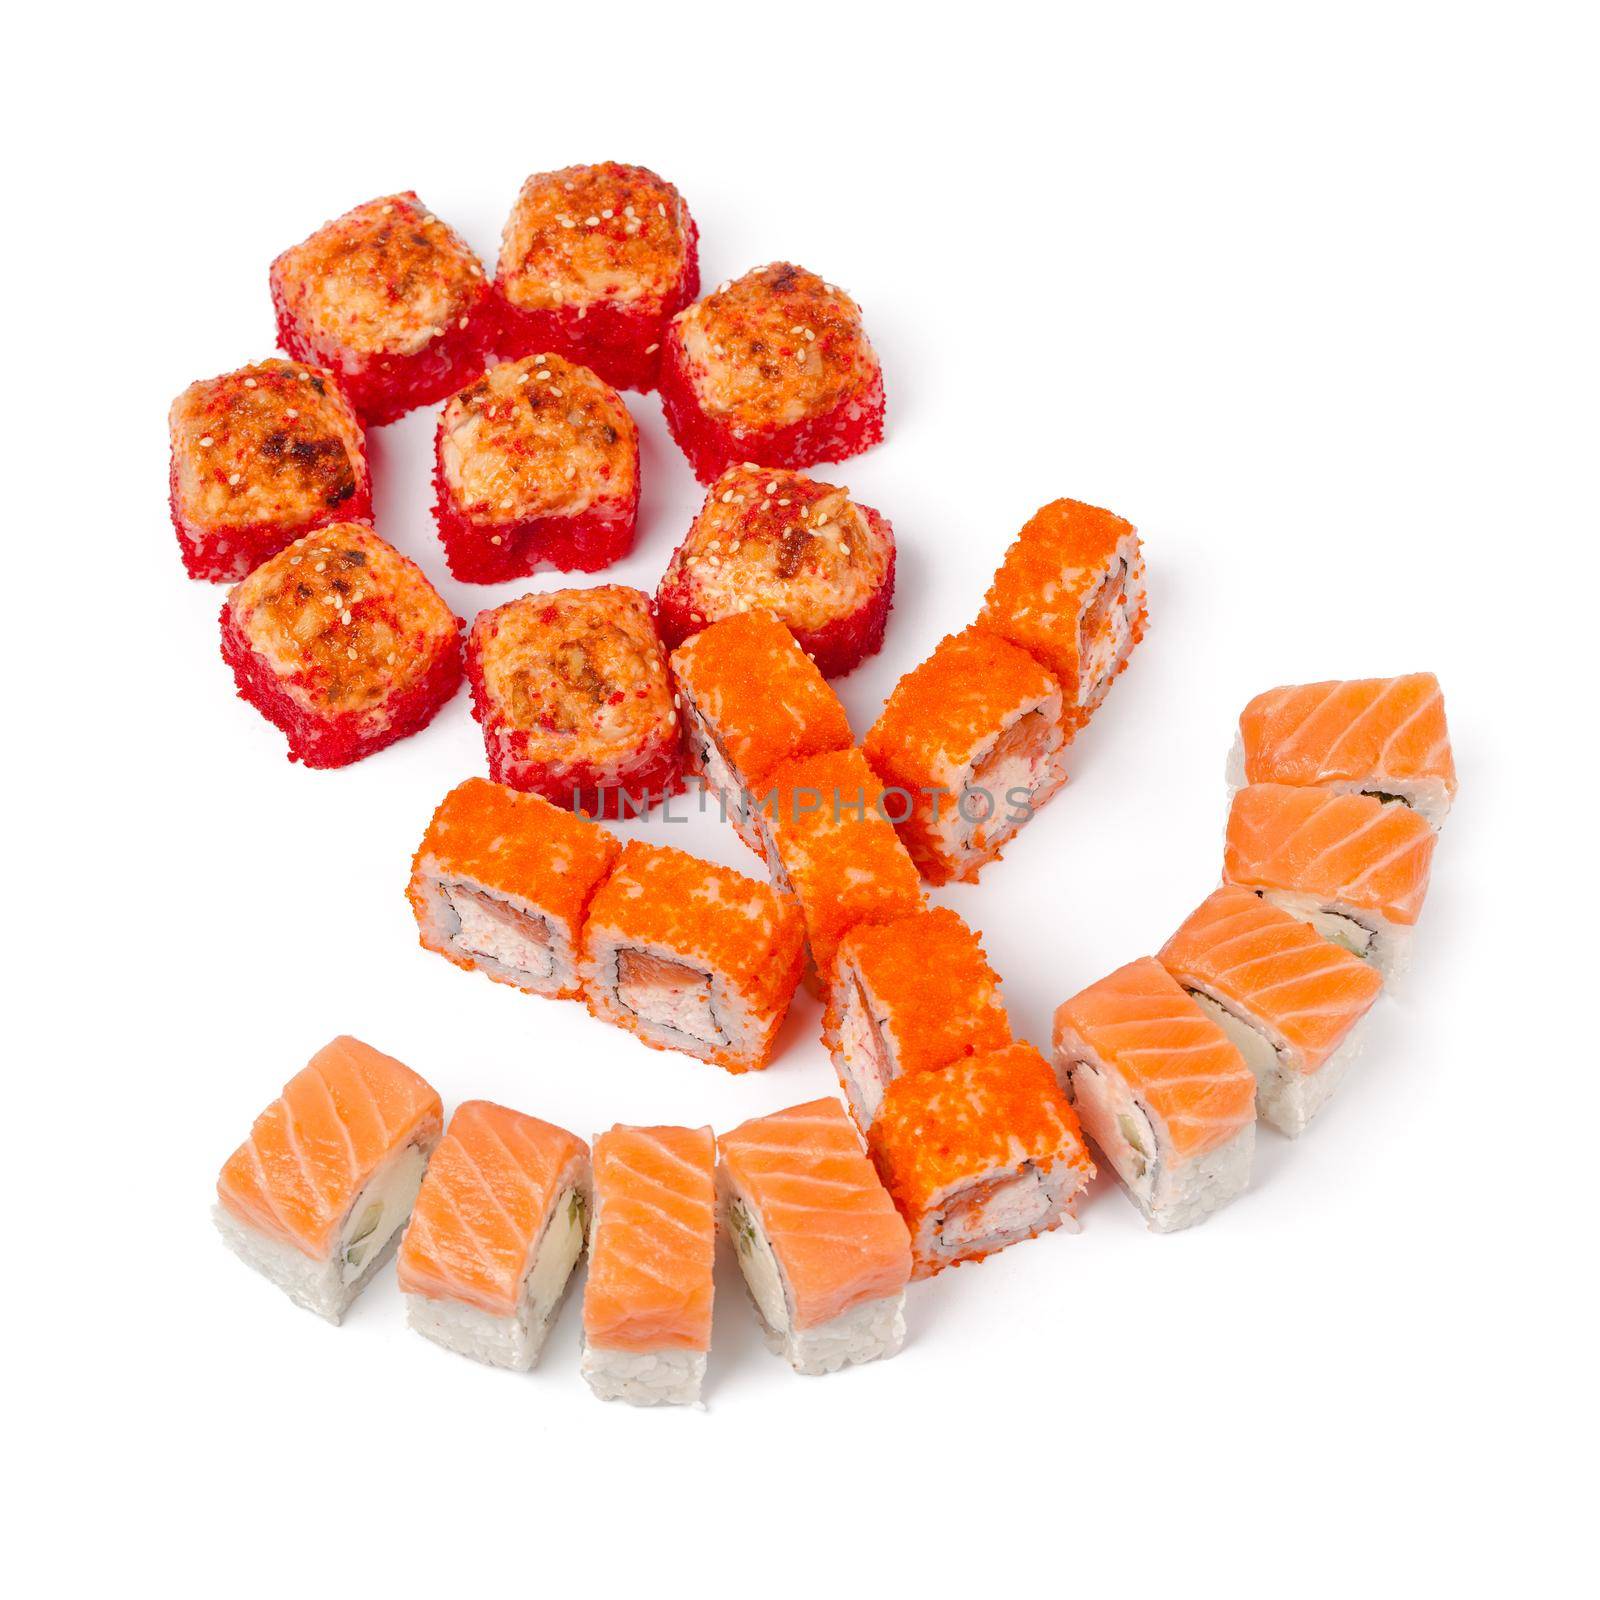 Japaneese food sushi roll isolated on white background by Fabrikasimf